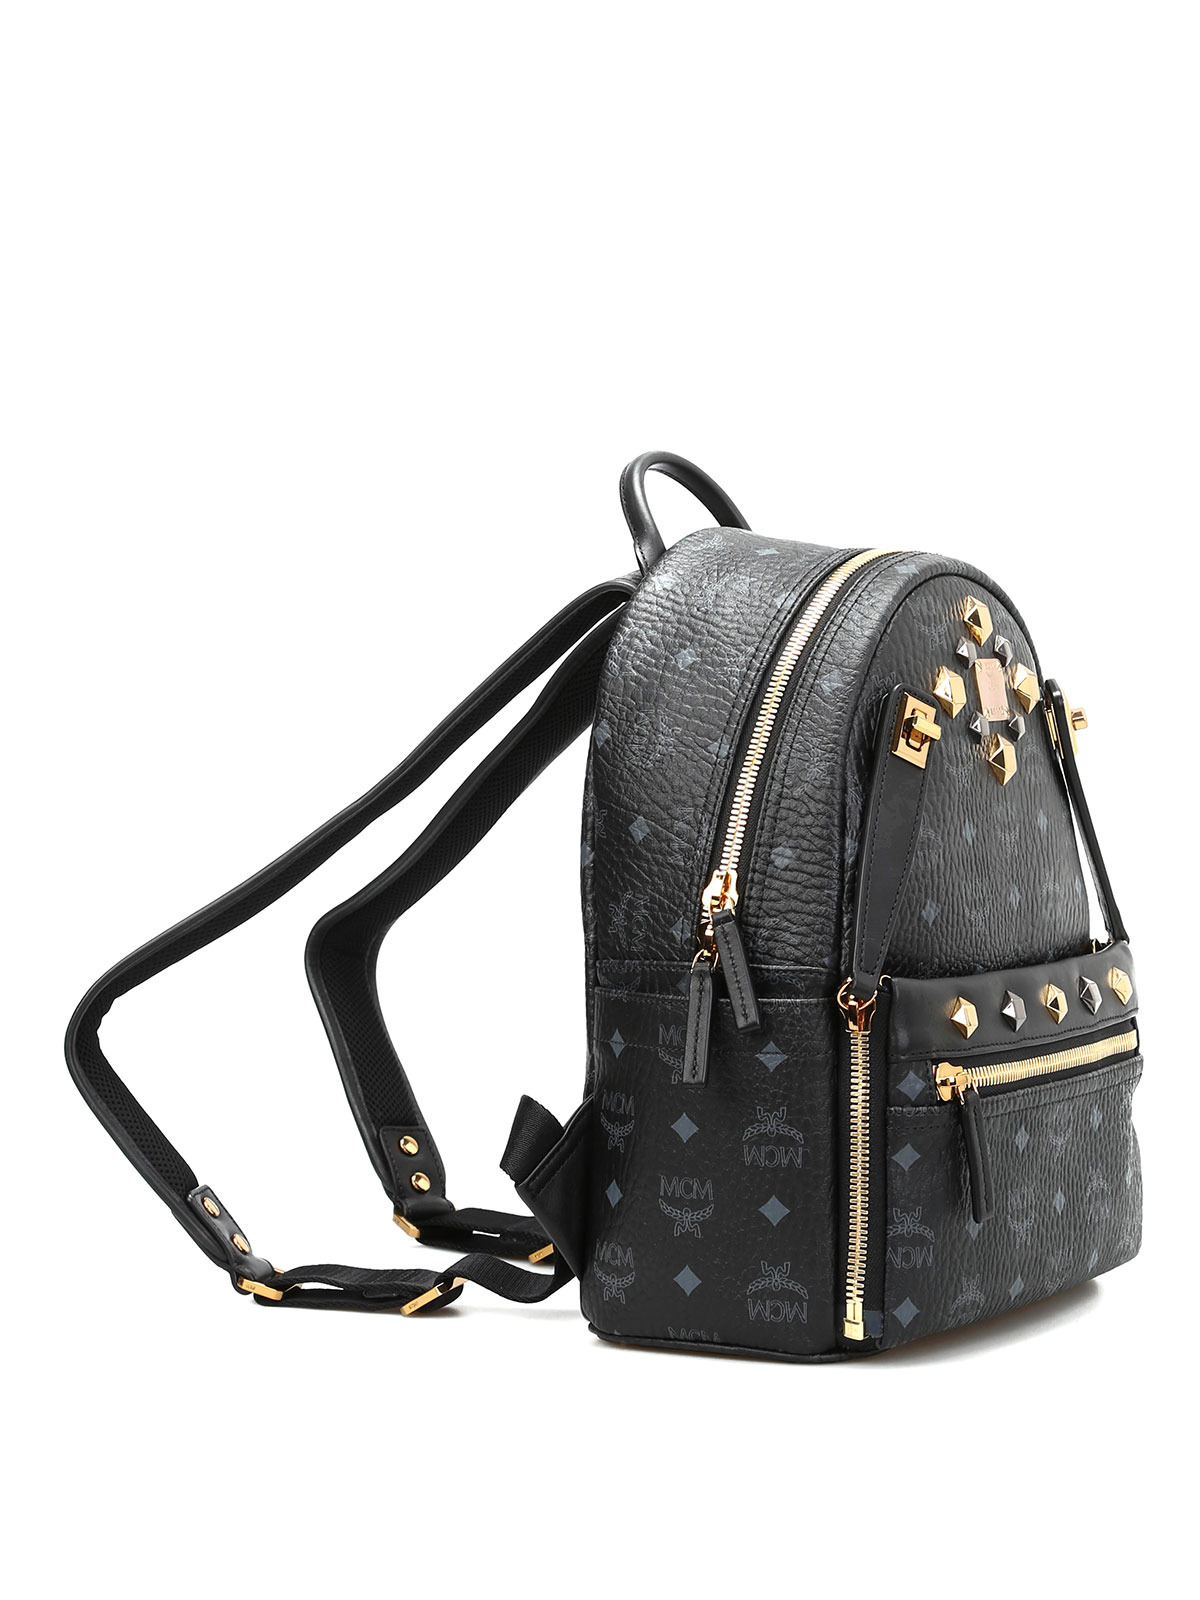 Mcm - Small Dual Stark leather backpack - backpacks - MMK6SVE80BK001